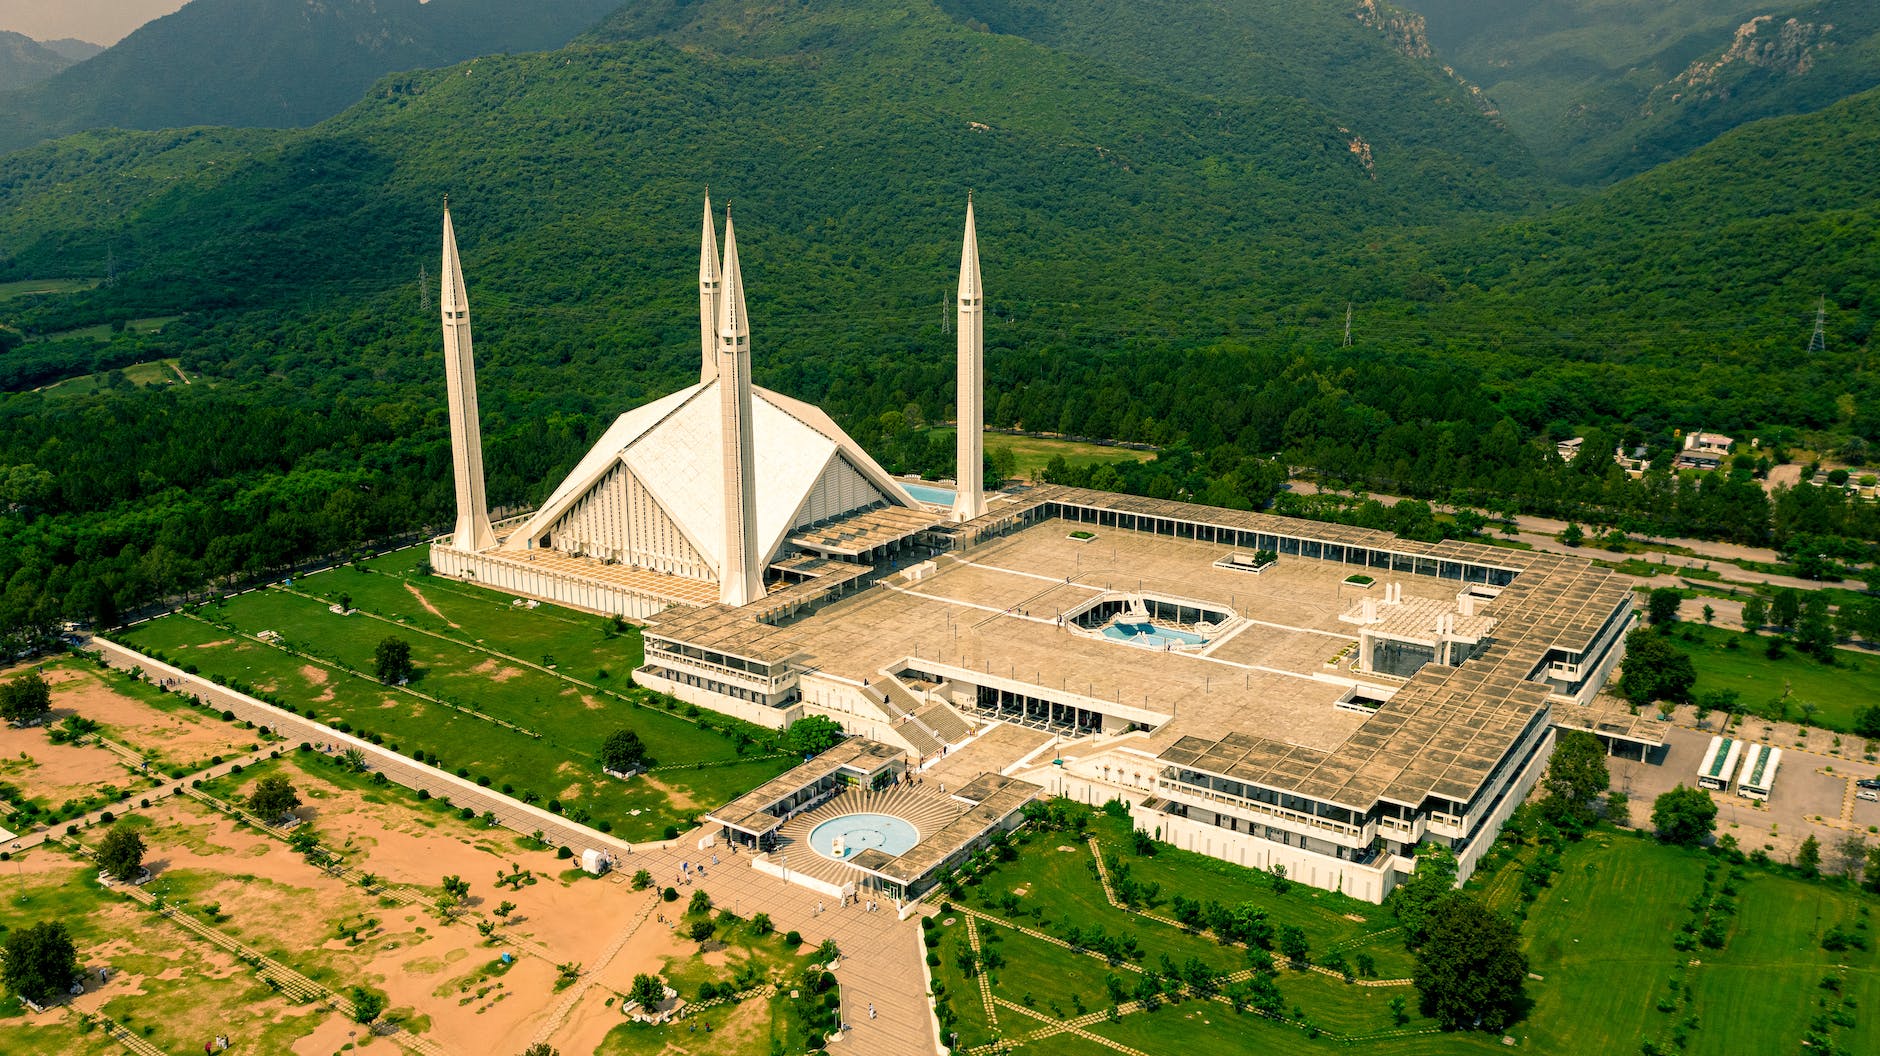 shah faisal mosque in Pakistan